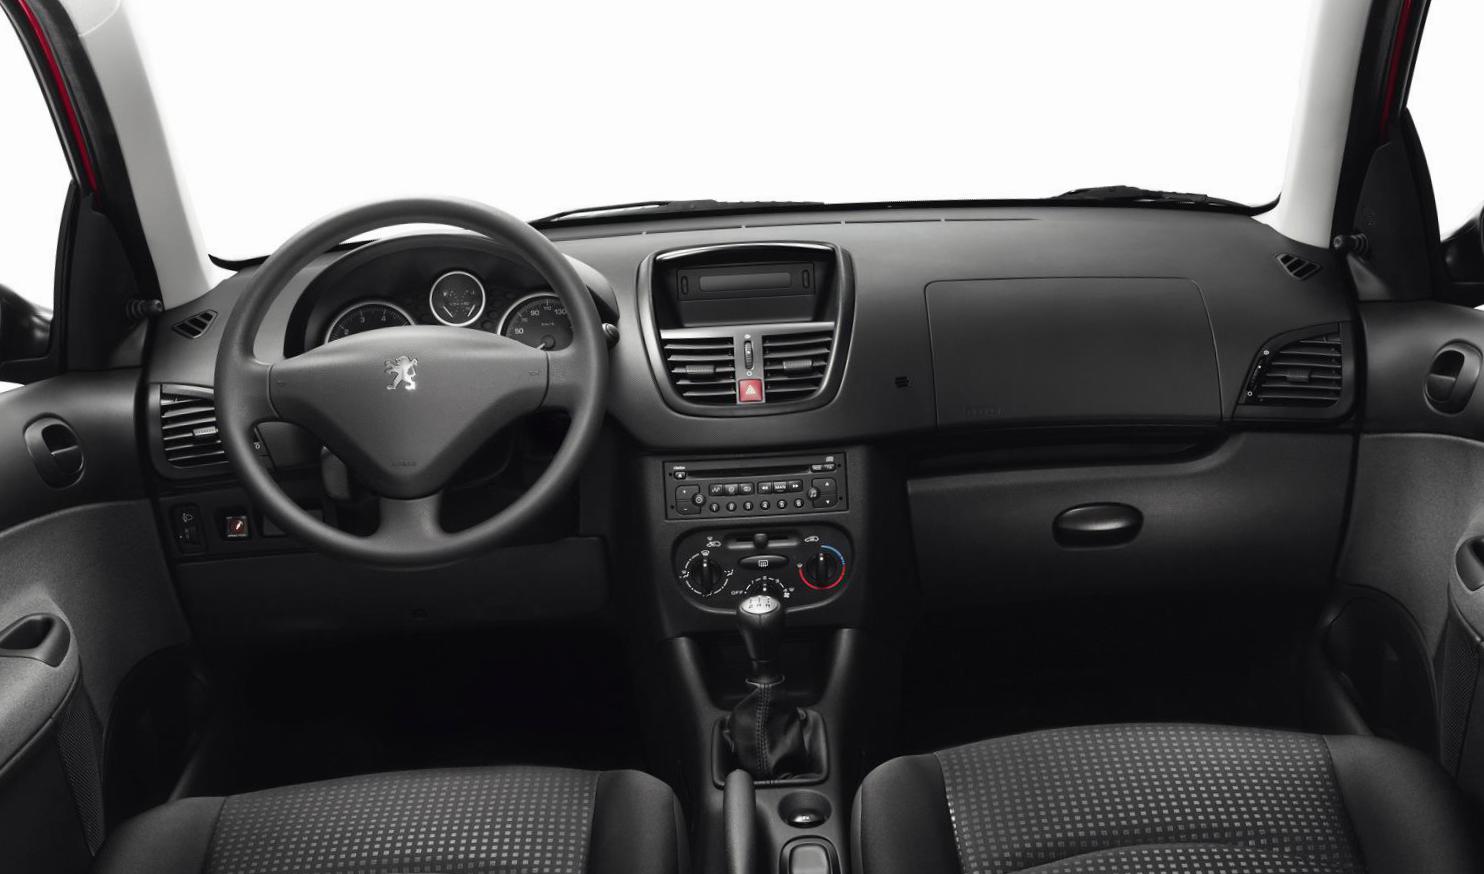 206 5 doors Peugeot concept sedan